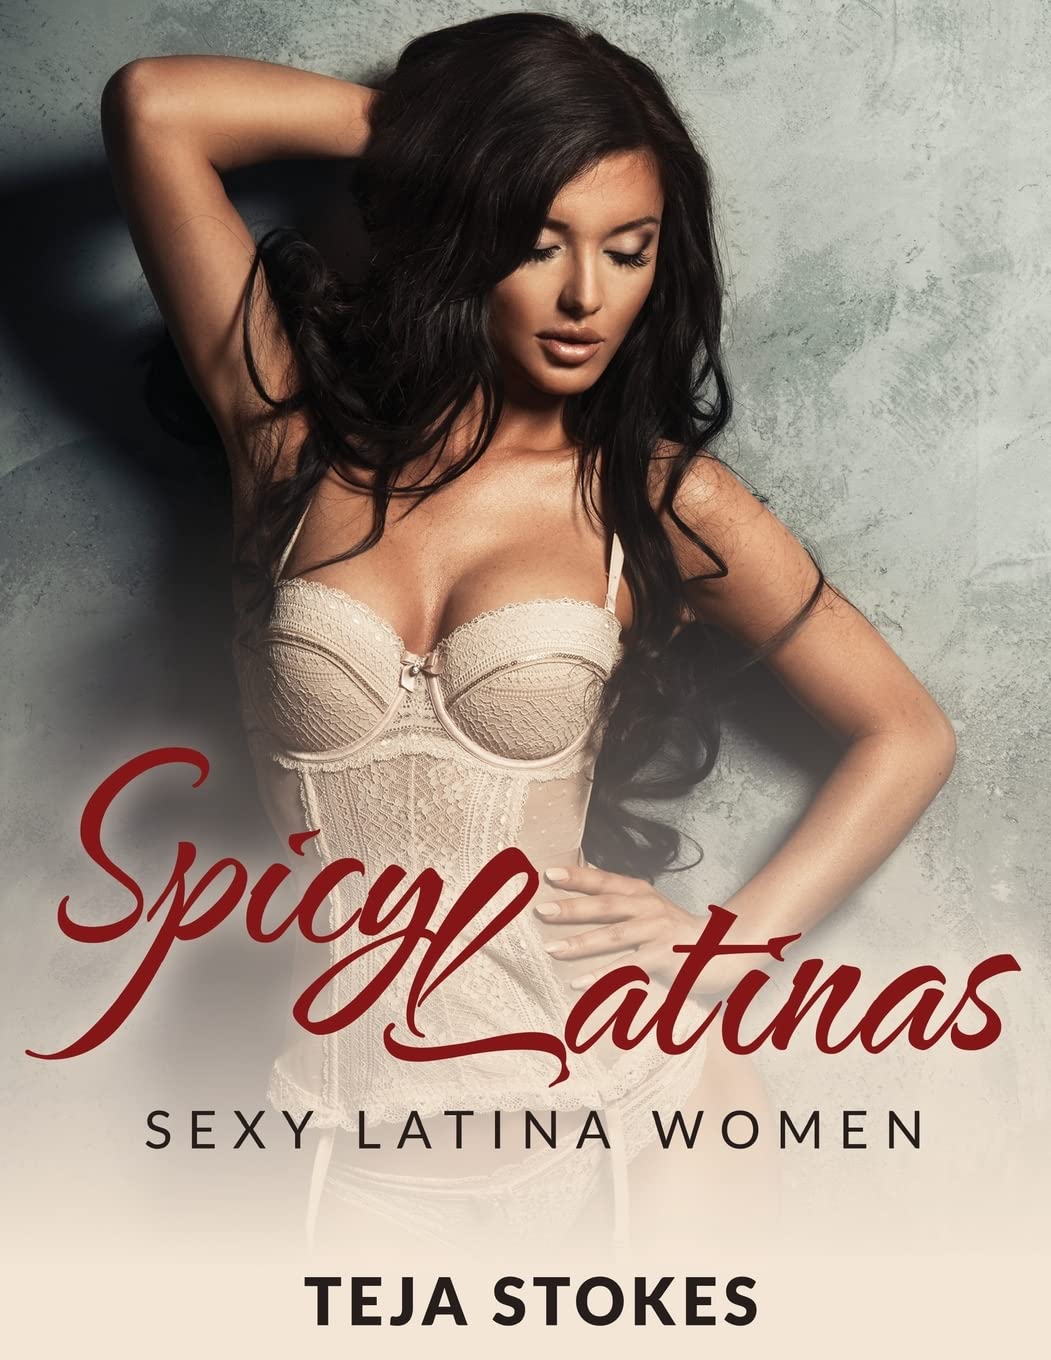 alisha malik share spicy latina big butt photos